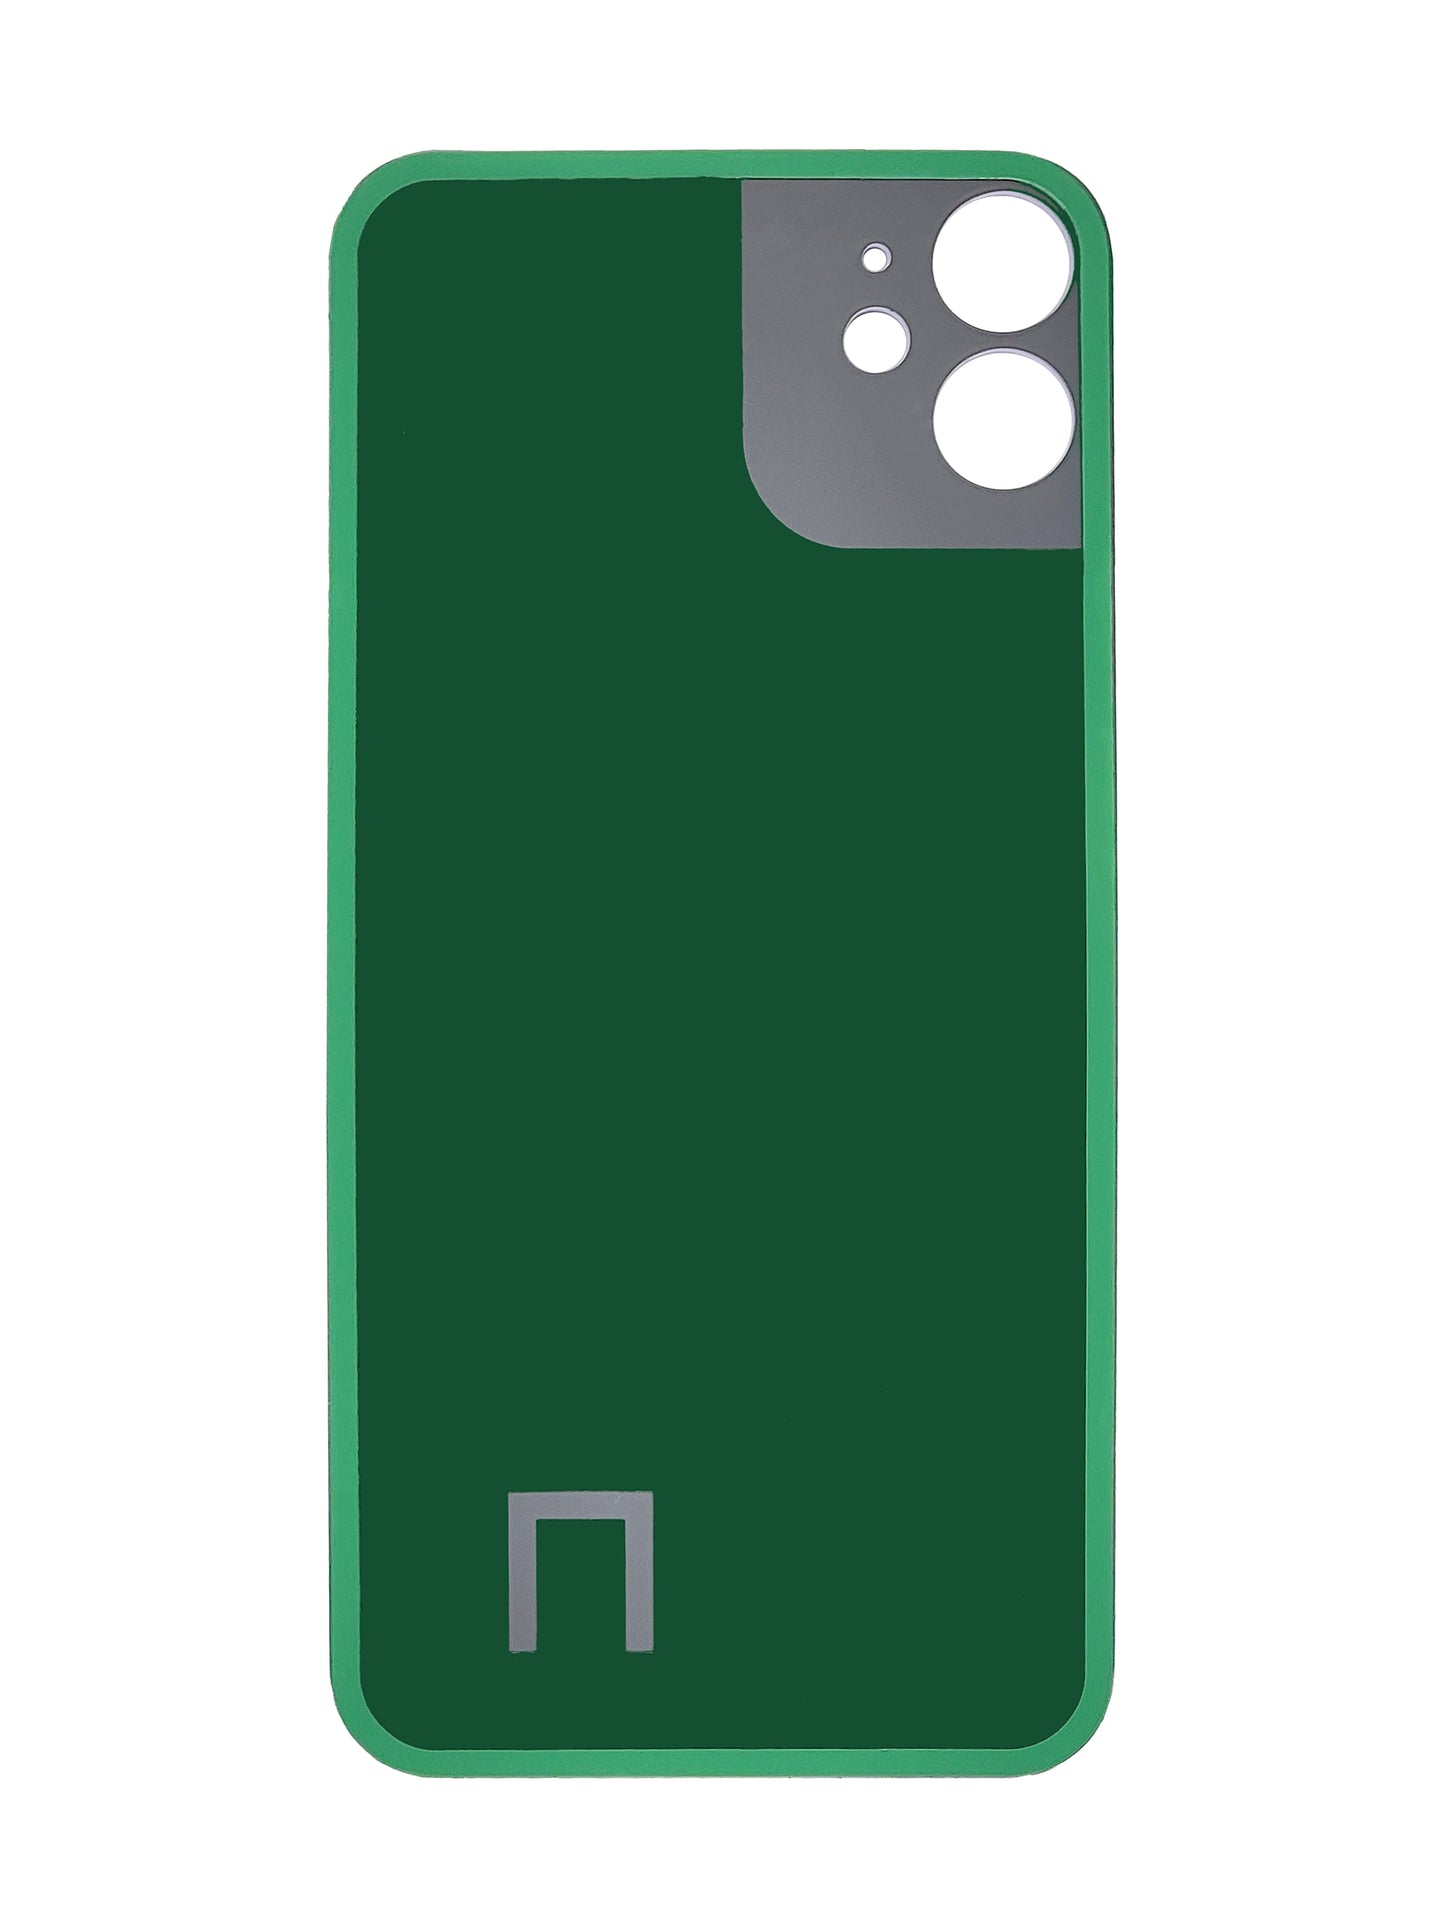 iPhone 11 Back Glass (No Logo) (Purple)